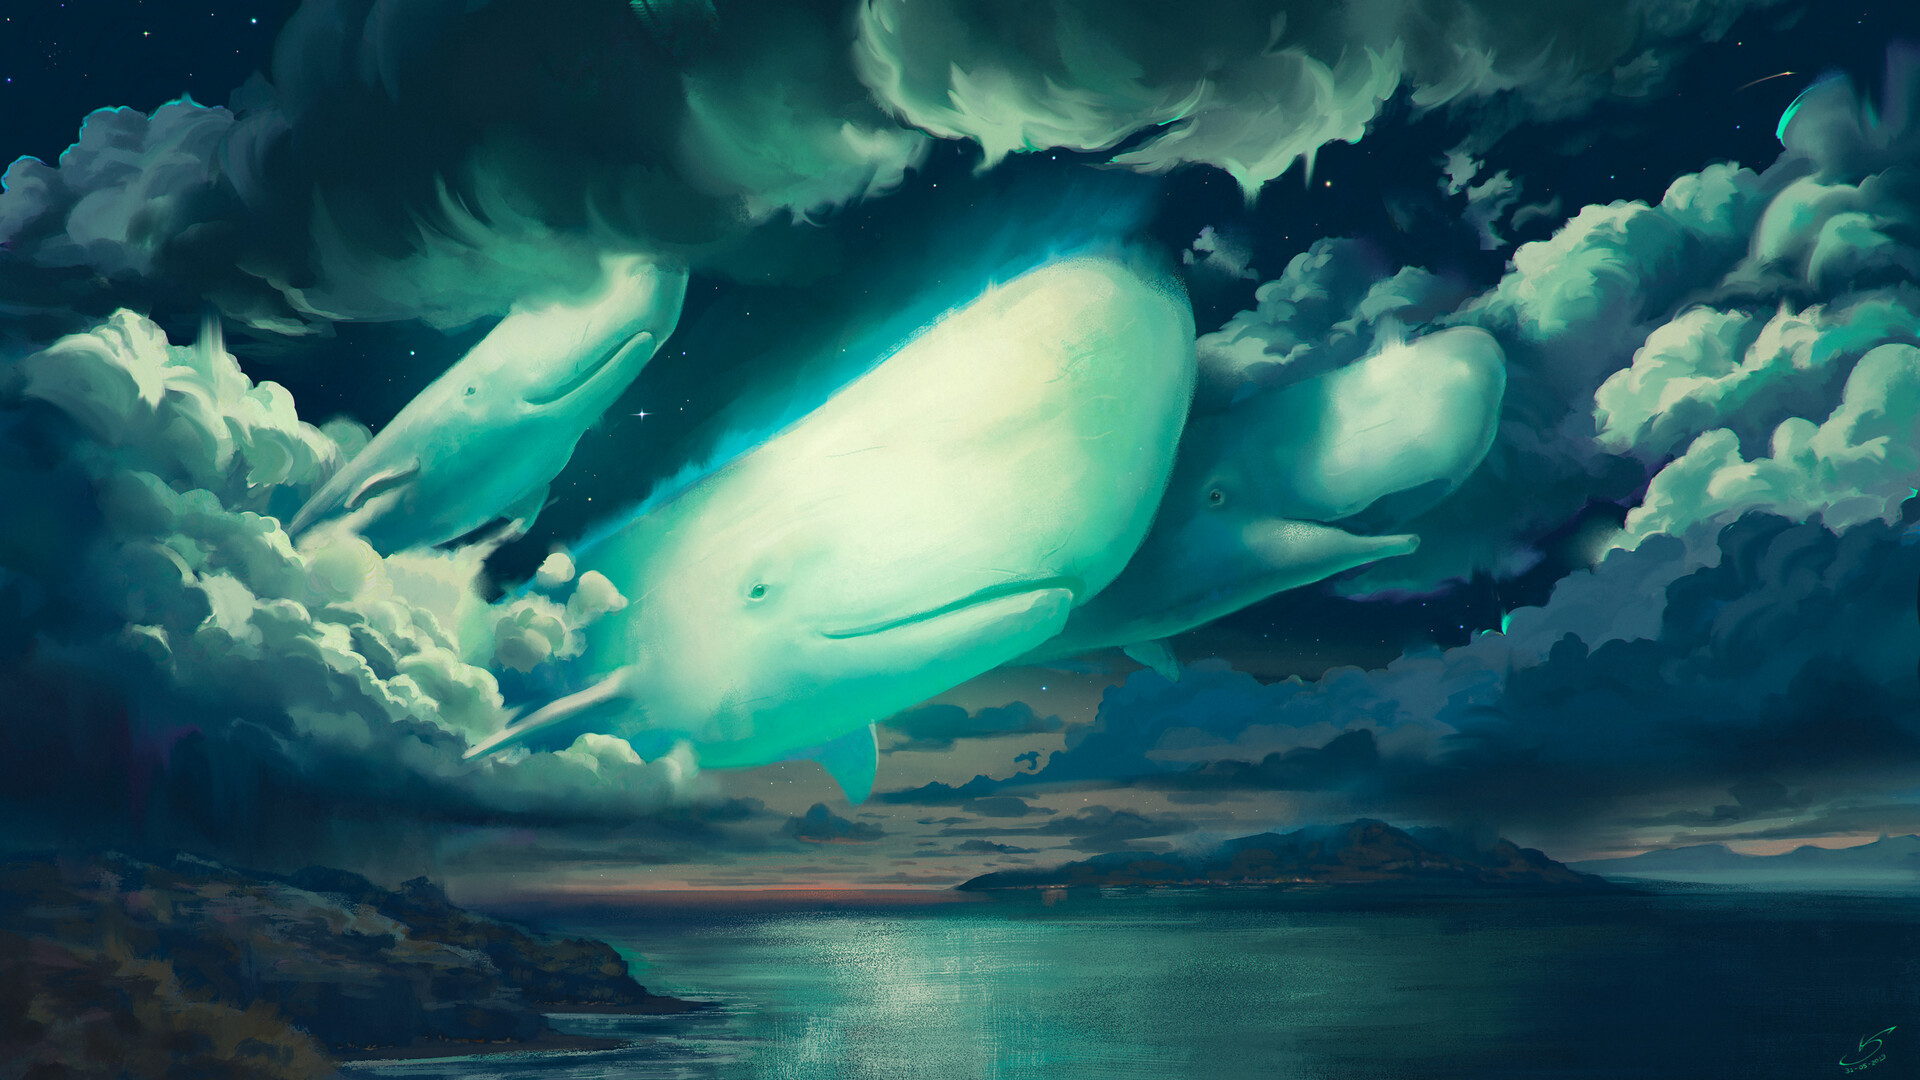 General 1920x1080 Victor Sales digital art fantasy art ArtStation whale clouds sky night sky starry night animals water